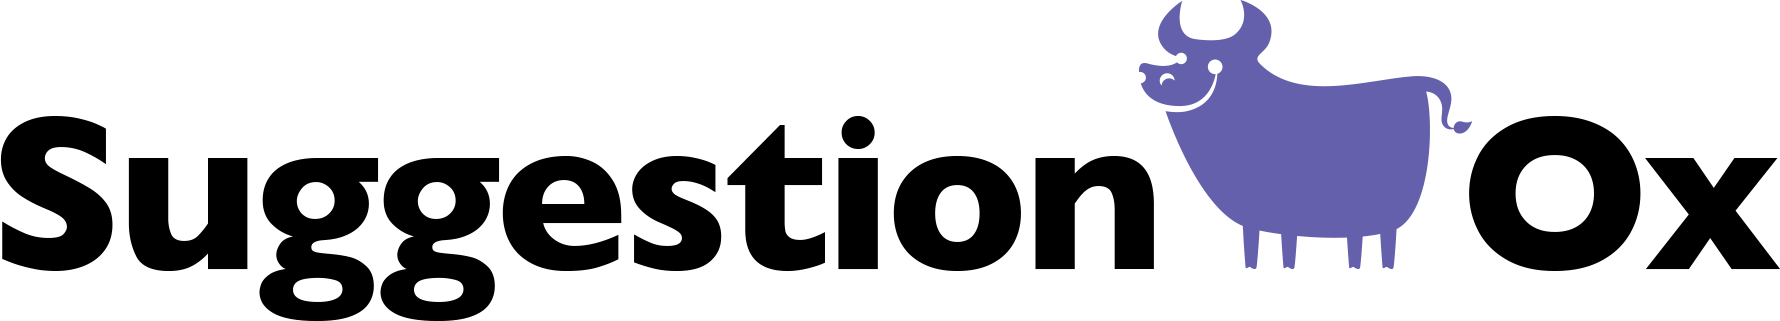 SuggestionOX logo